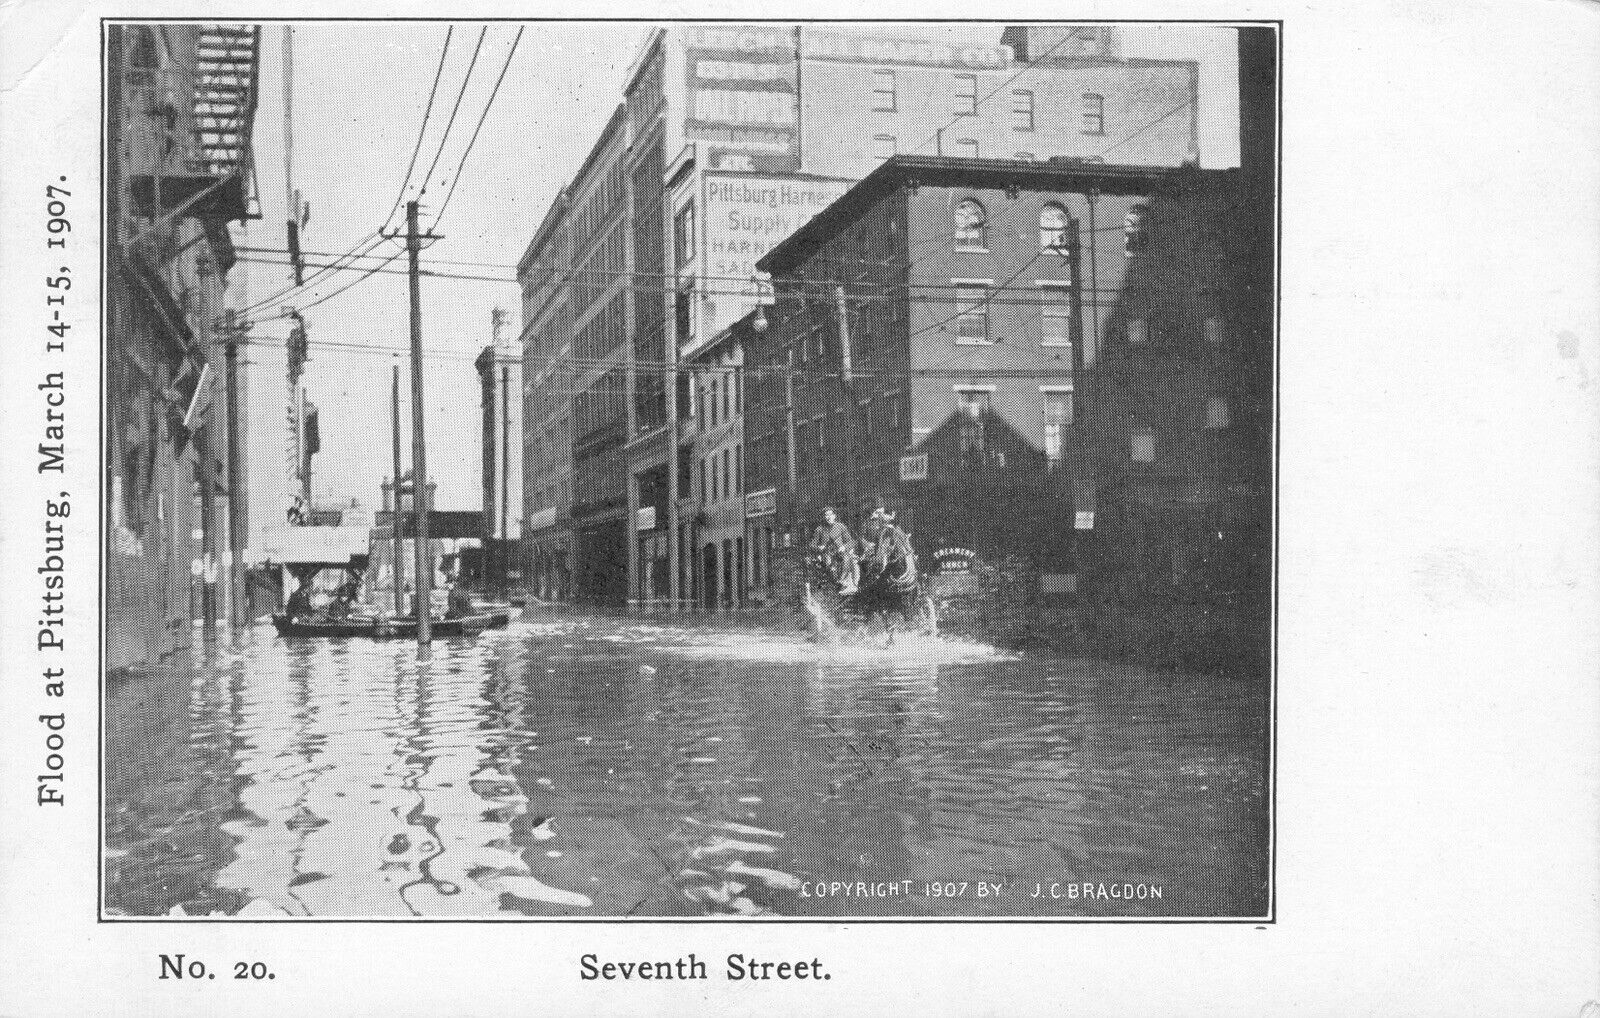 1907 FLOOD at Pittsburg March 14-15, Seventh Street Antique POSTCARD J.C.Bragdon